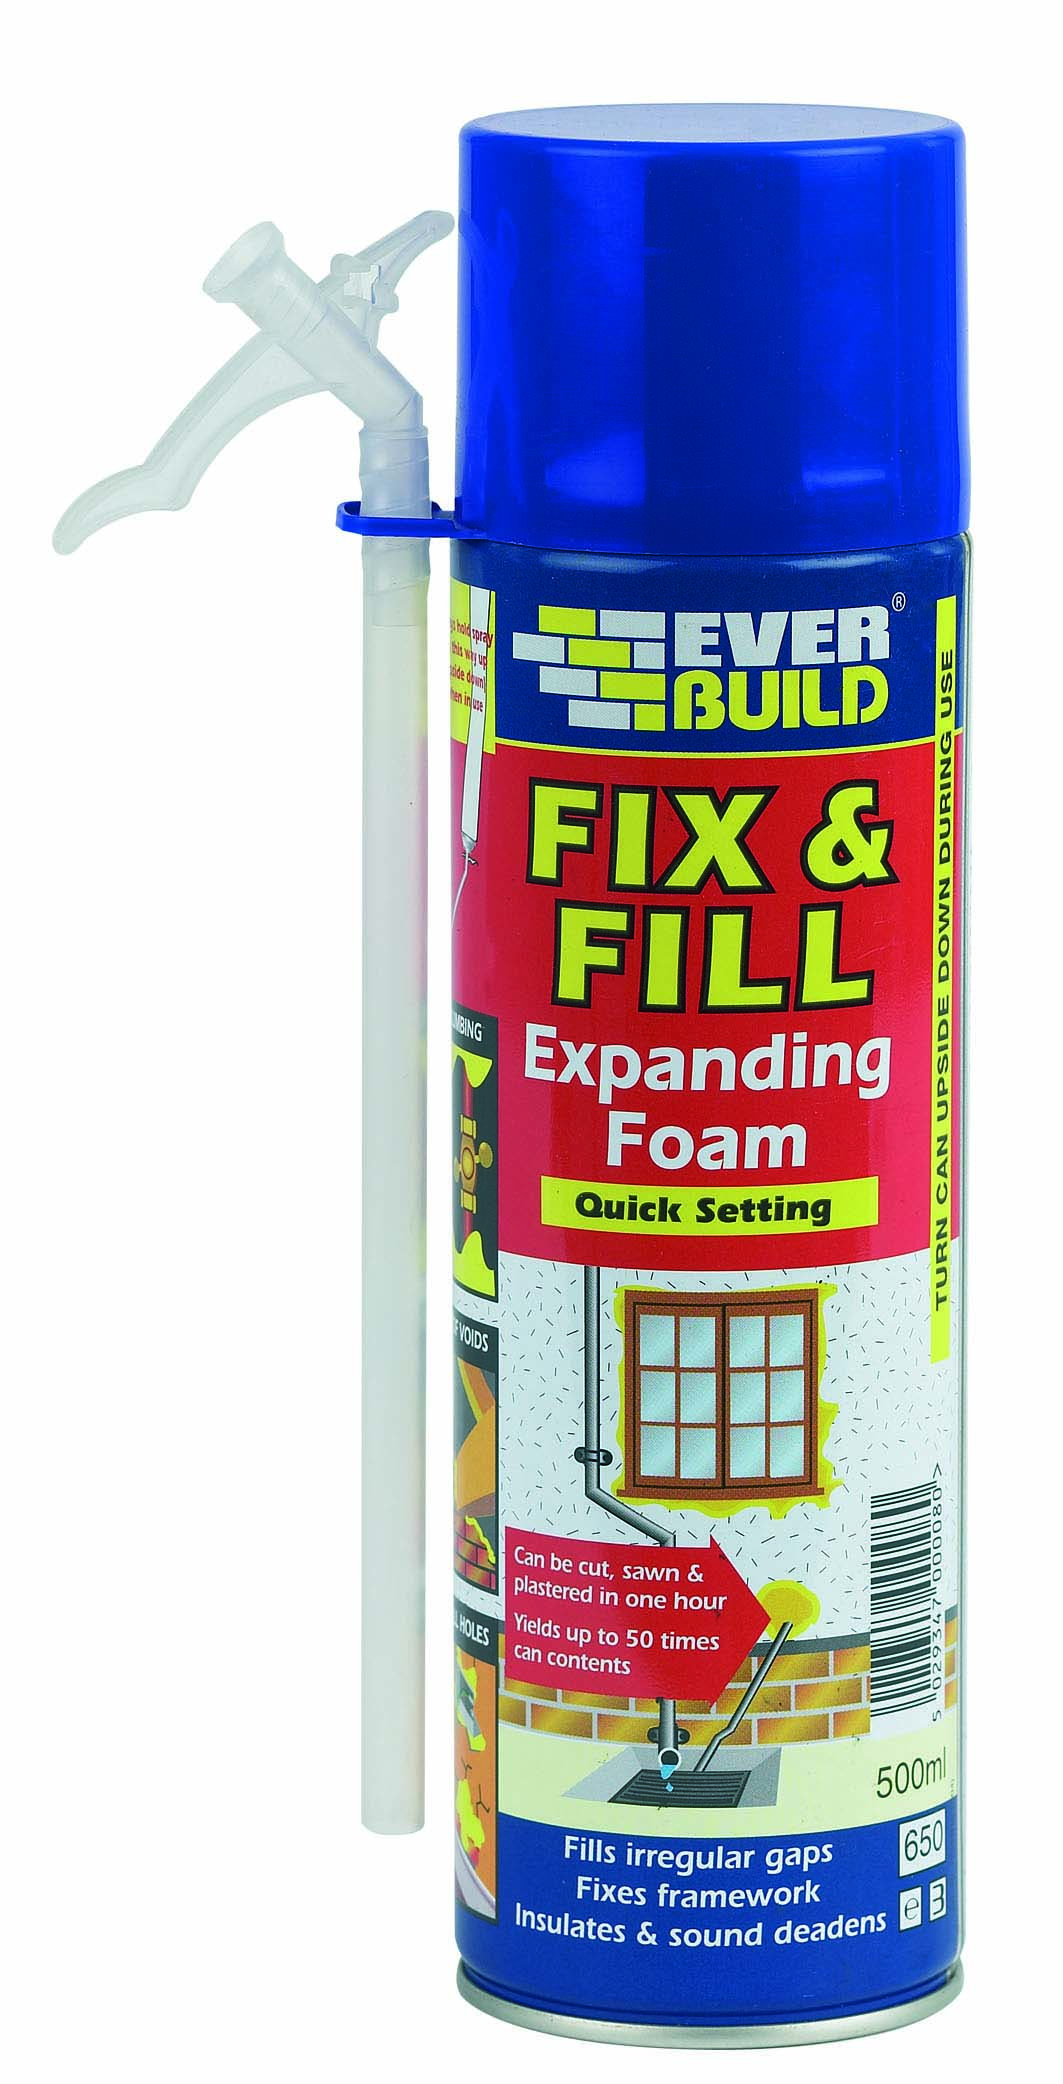 EVER BUILD FIX & FILL EXPANDING FOAM